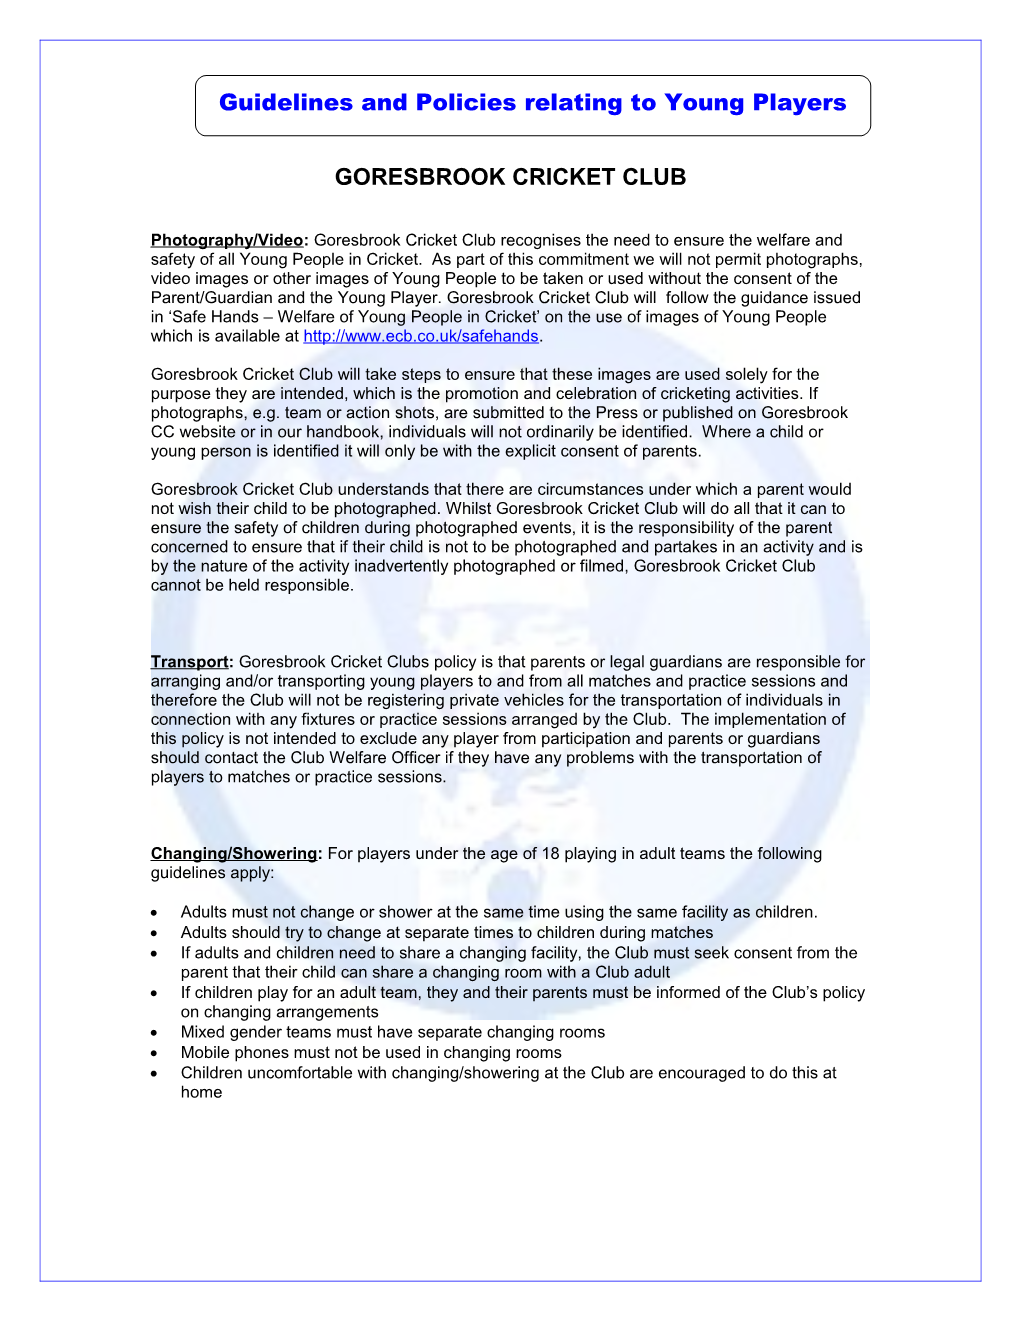 Goresbrook Cricket Club